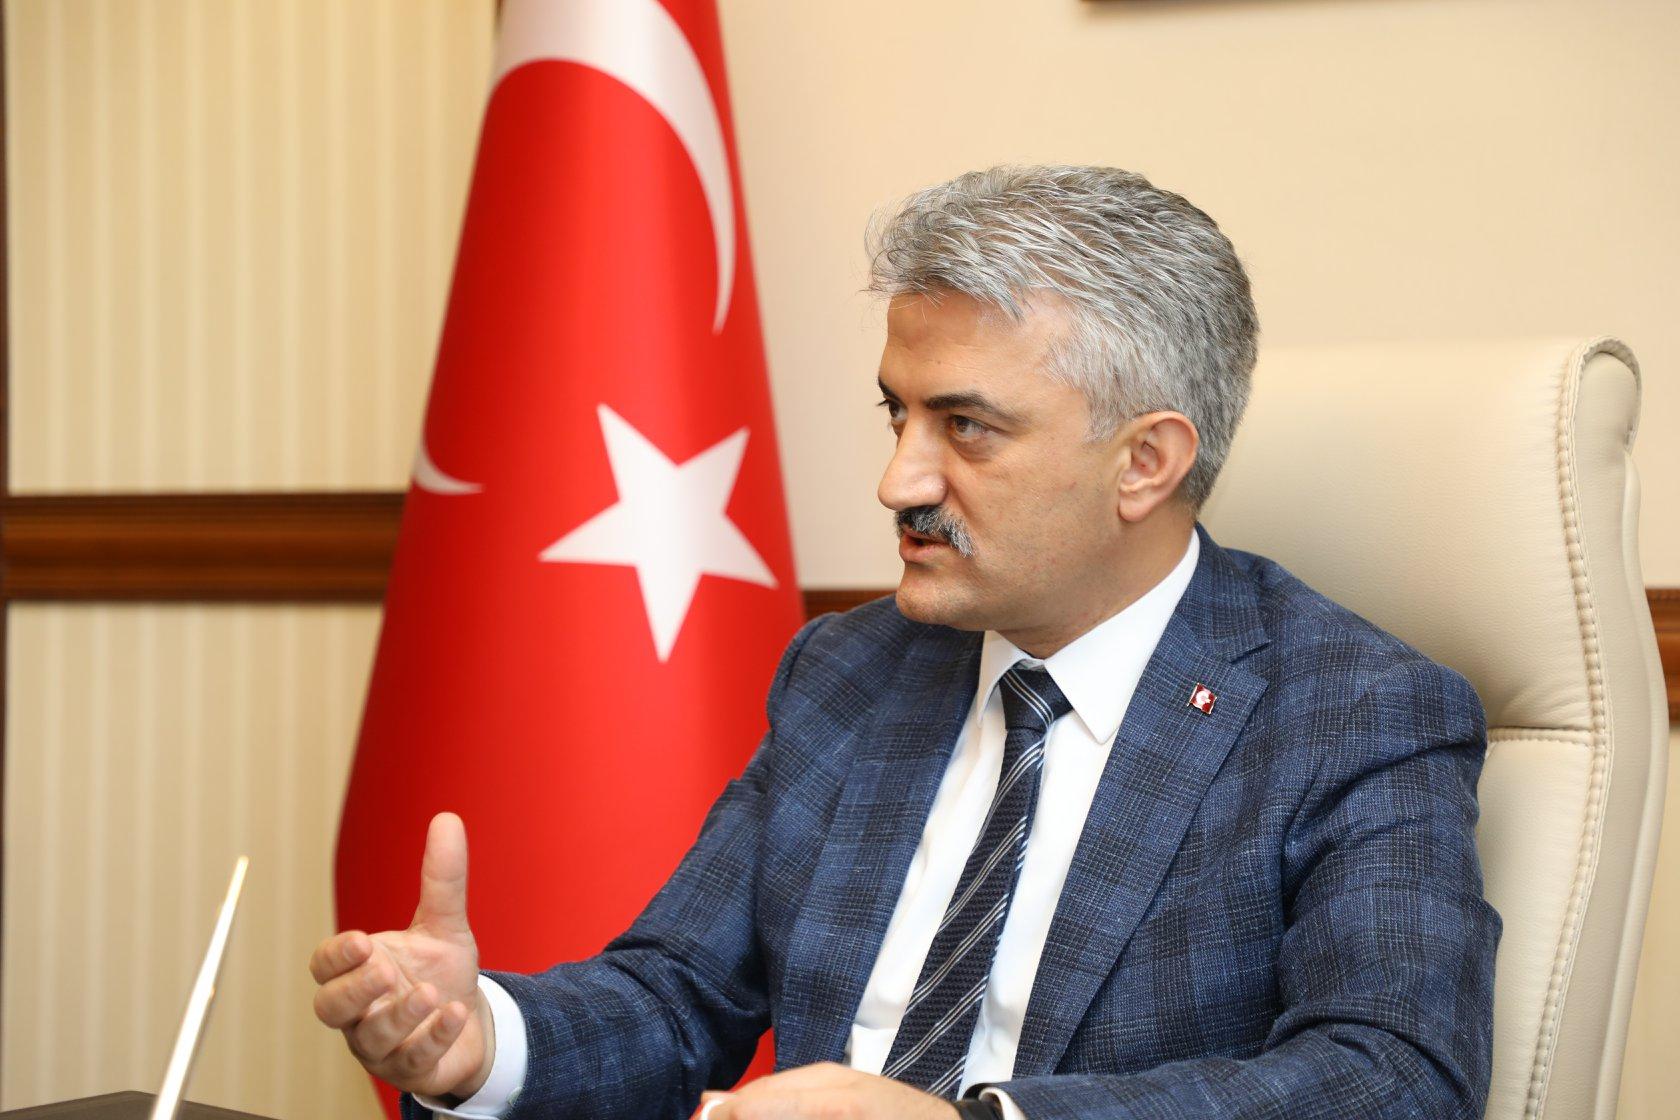 Erzincan Valisi Mehmet Makas, Kırıkkale Valisi Oldu - Kırıkkale Haber, Son Dakika Kırıkkale Haberleri